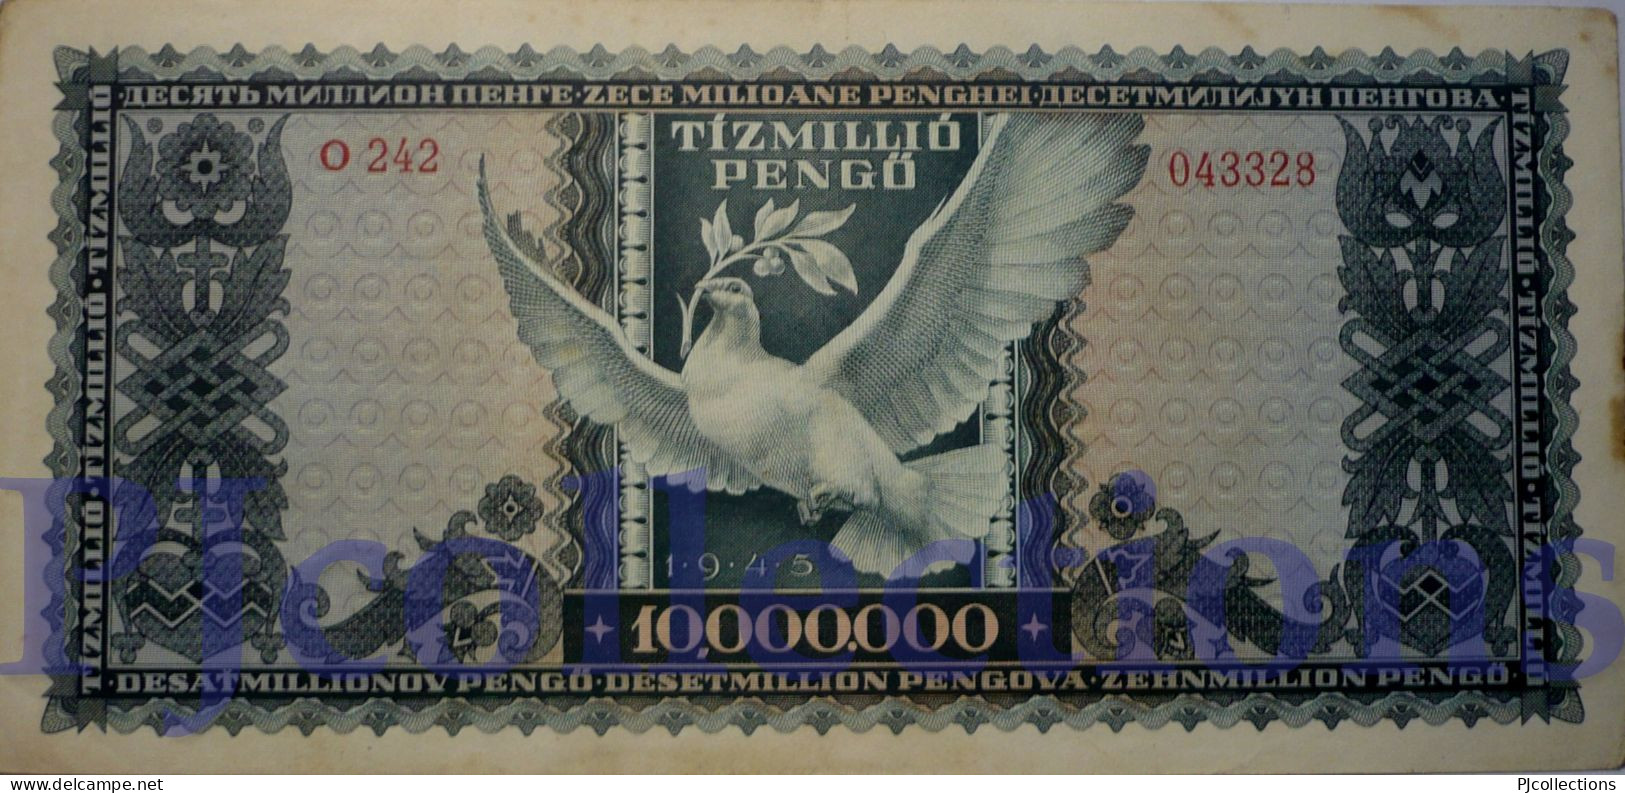 HUNGARY 10 MILLION PENGO 1945 PICK 123 AU- W/STAINS - Ungarn